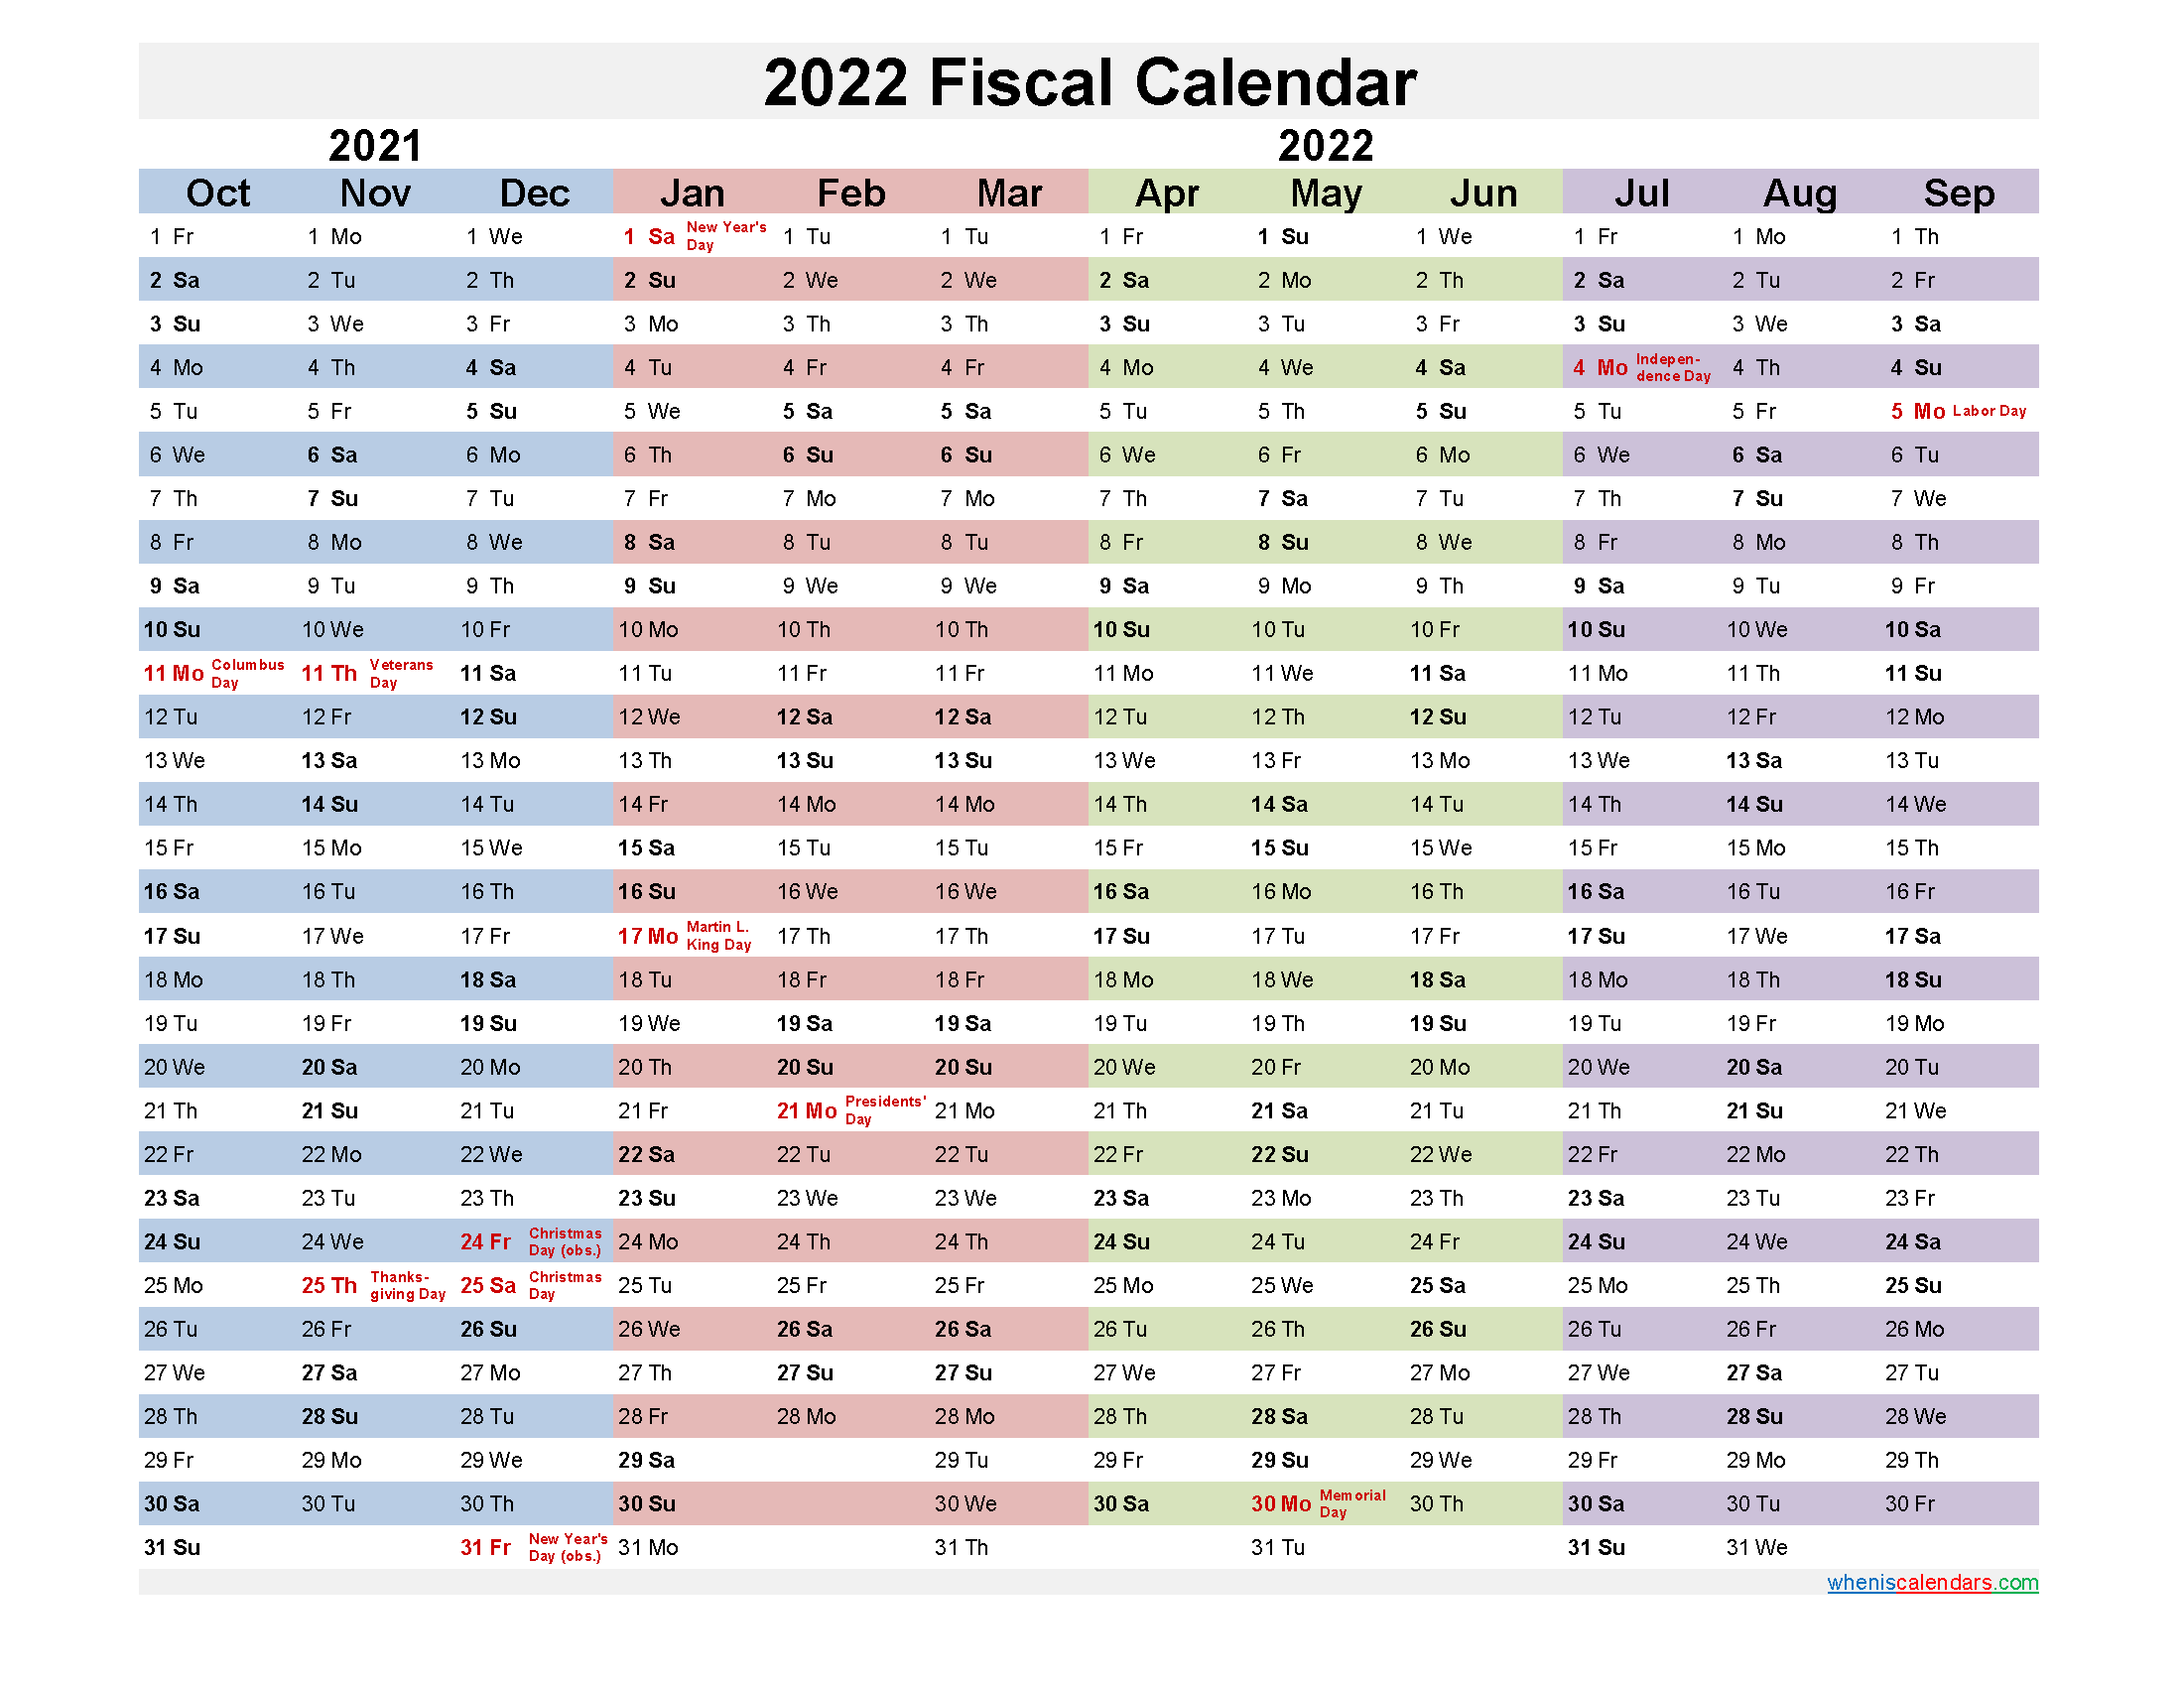 Fiscal Year Calendar 2022